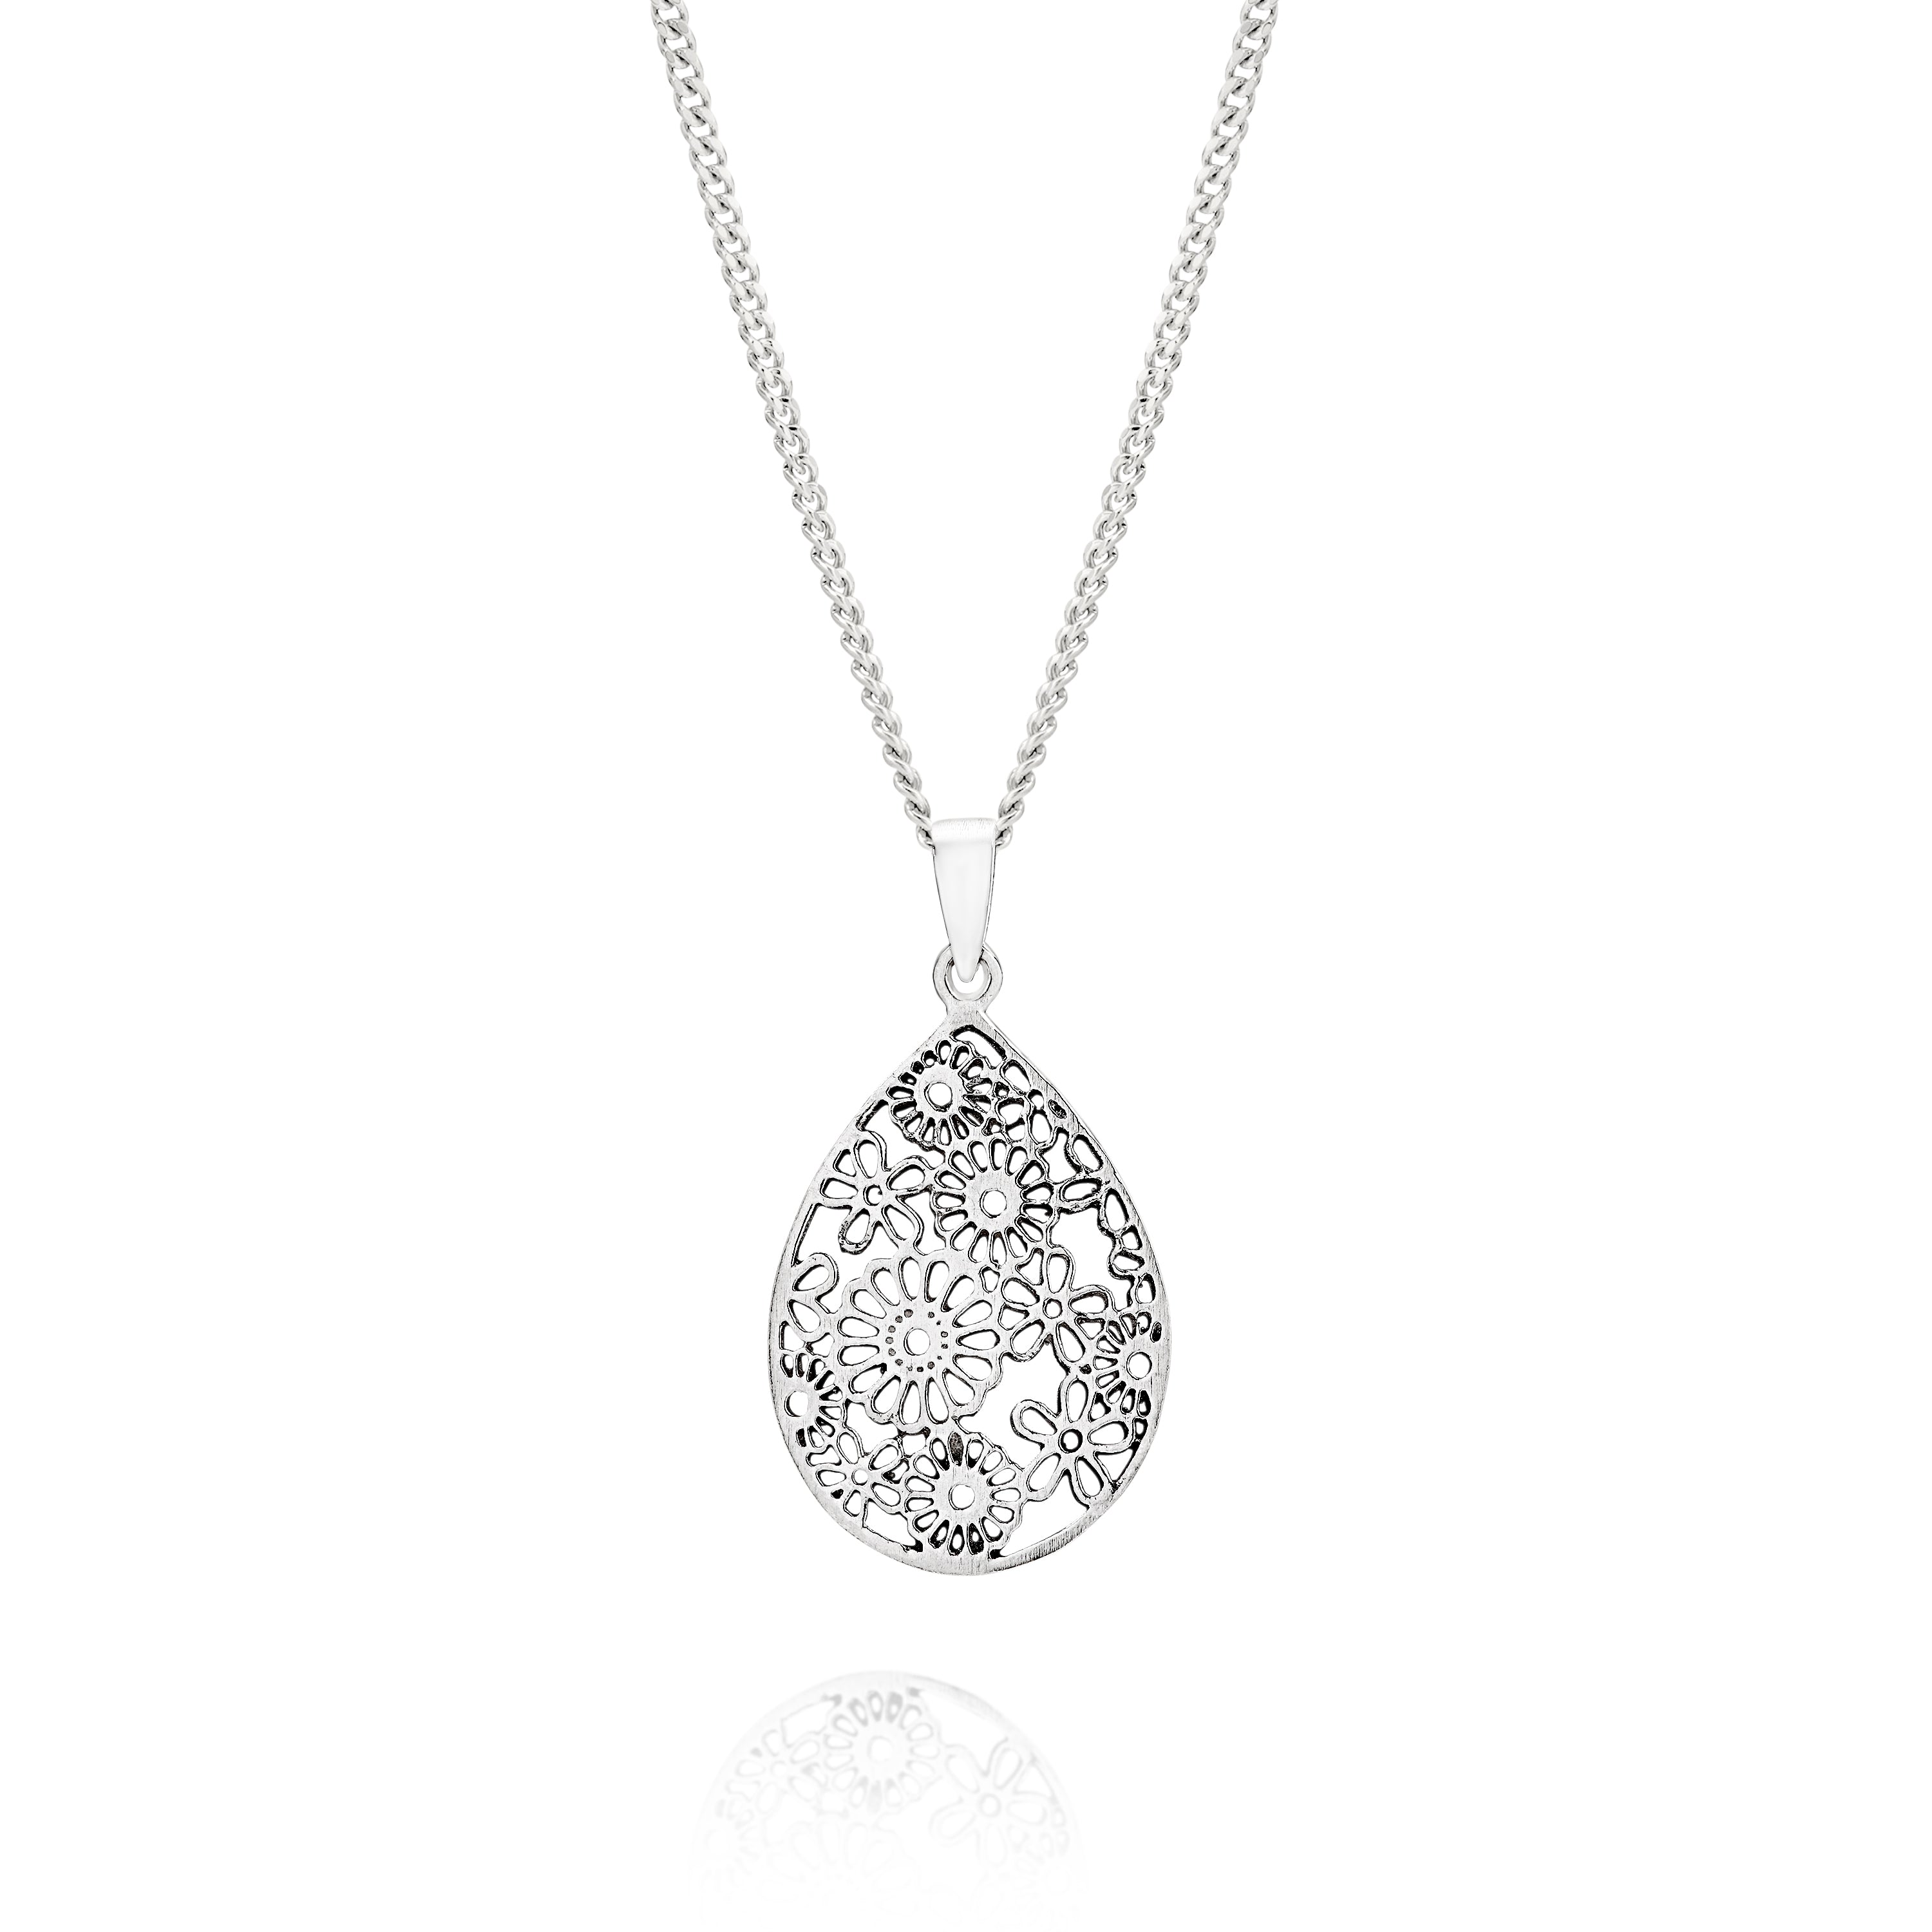 Silver pear shape filigree daisy pendant